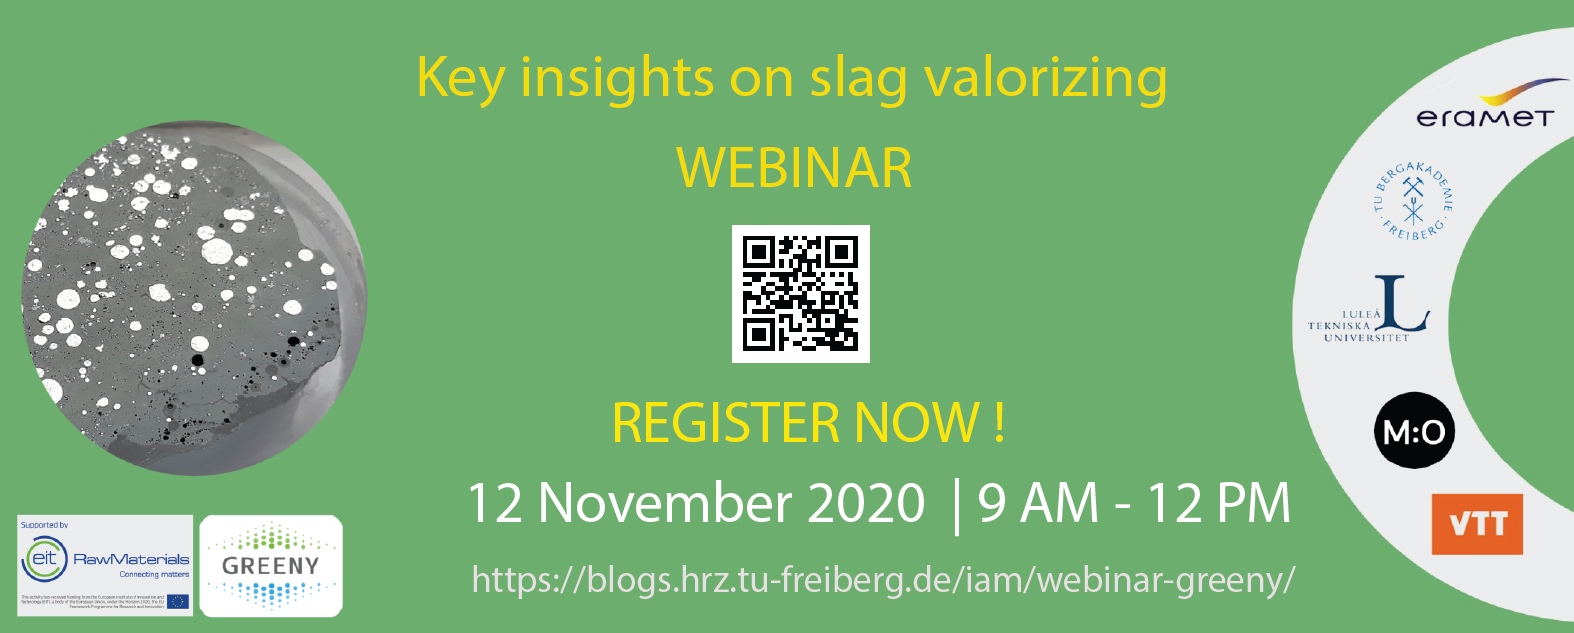 GREENY webinar: Key insights on Slag valorizing 